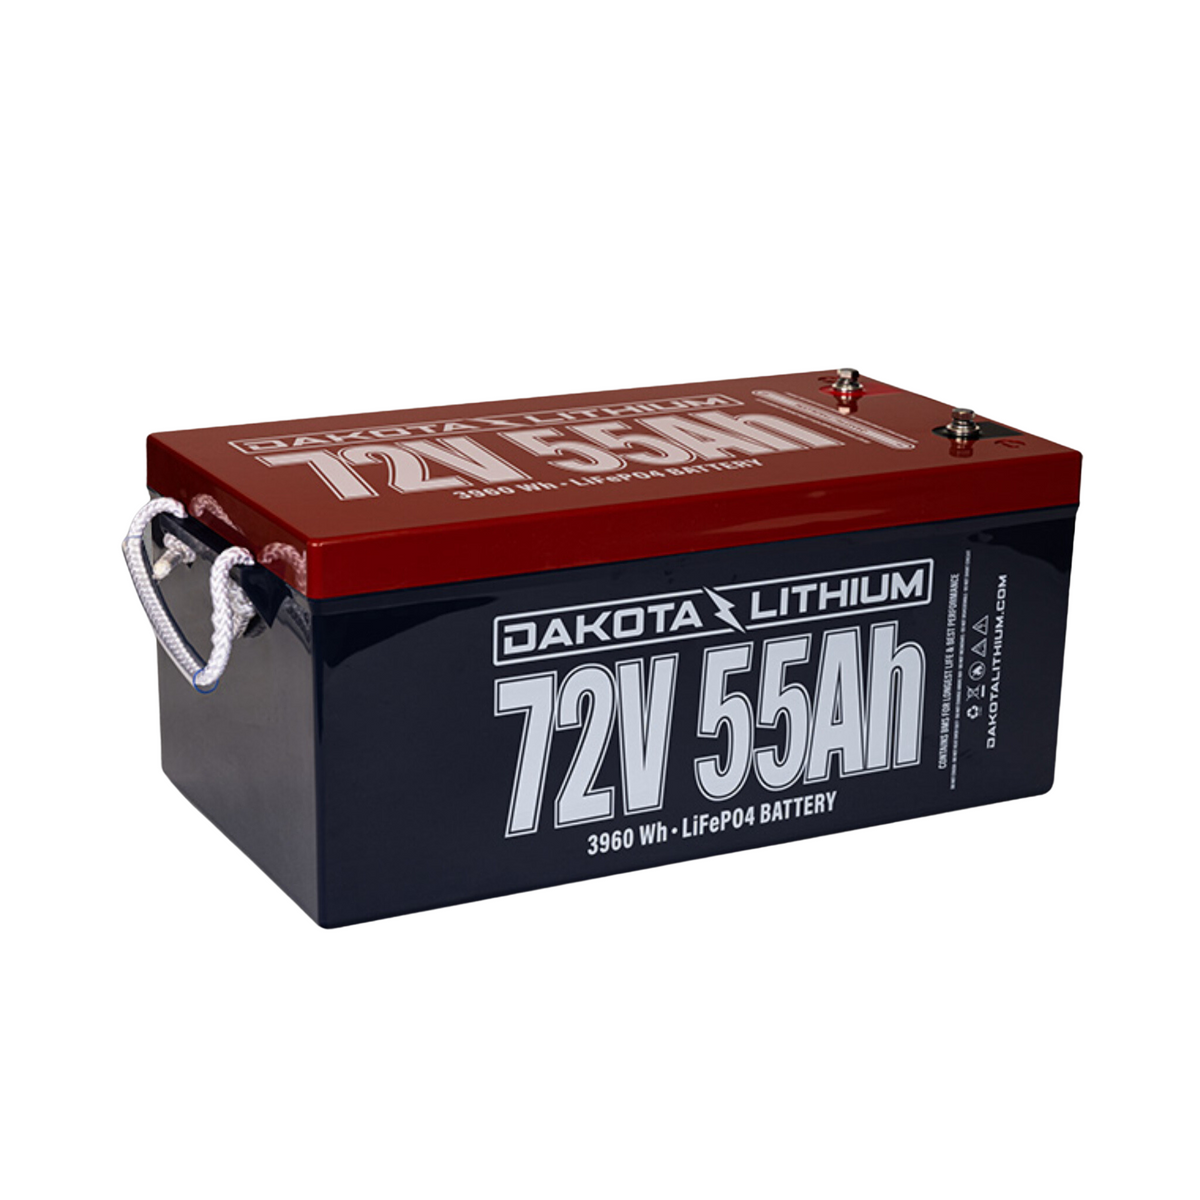 Dakota Lithium 72V 55Ah Deep Cycle LiFePO4 Battery